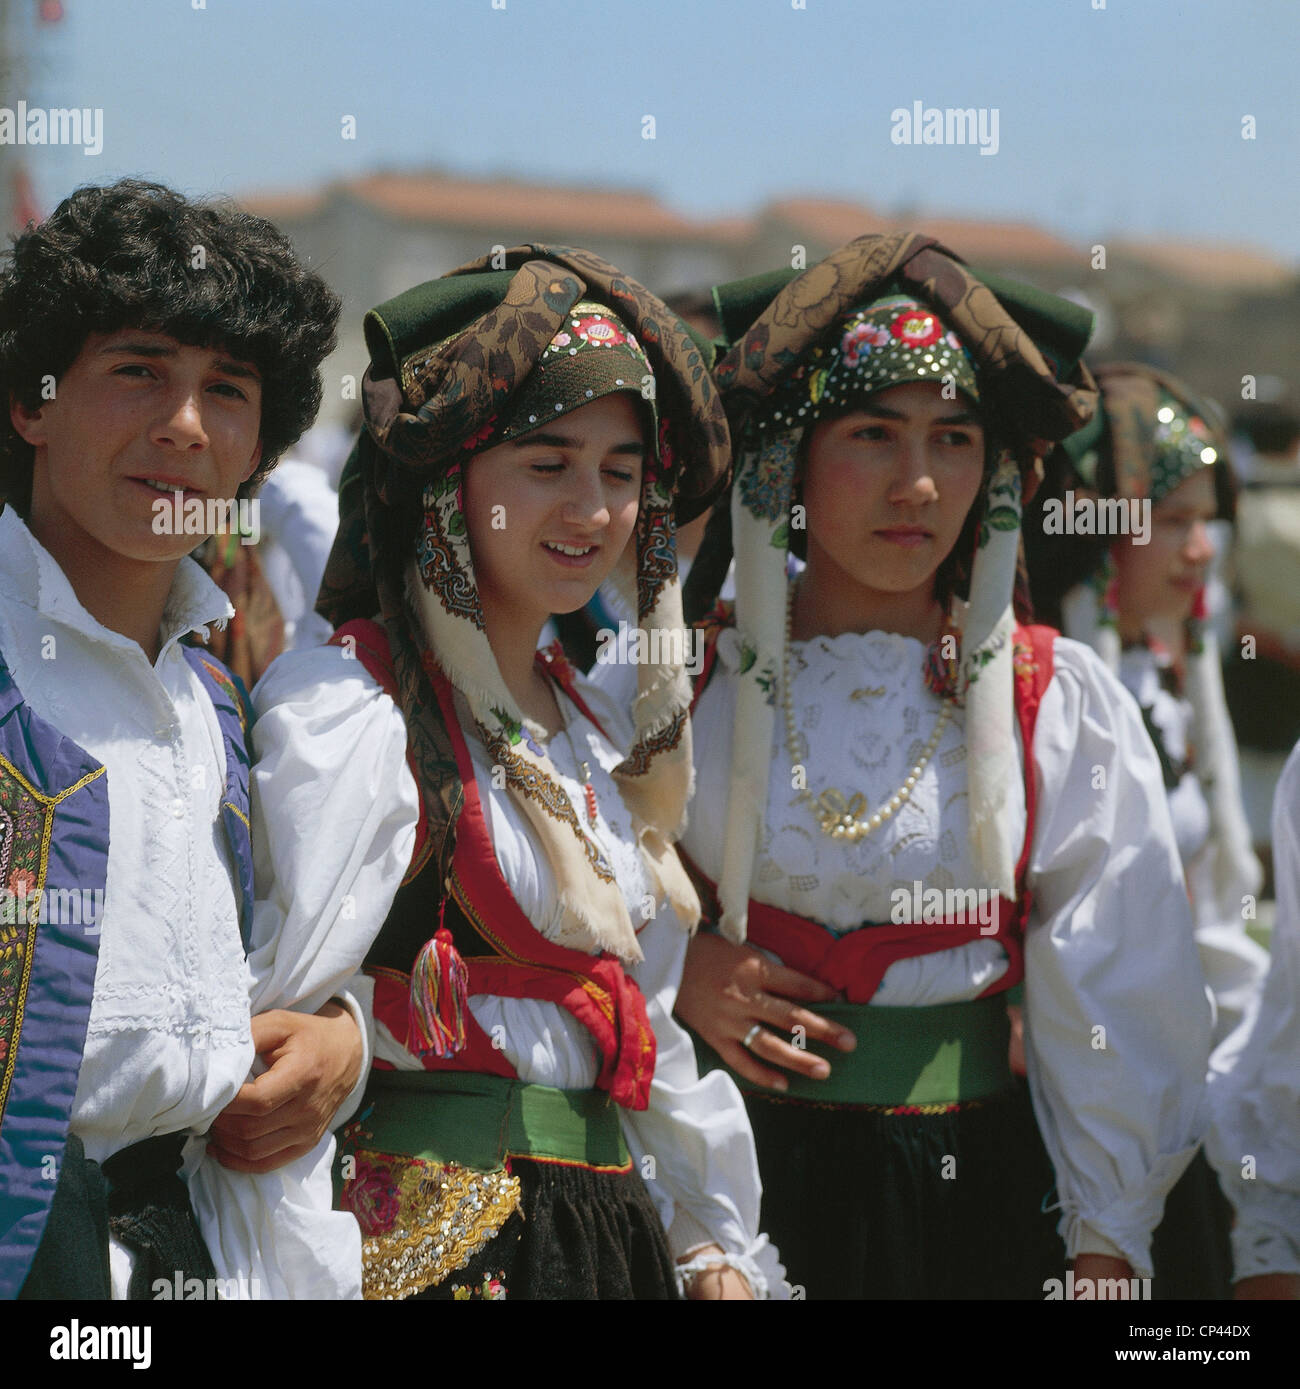 Sardegna - Samugheo (O) - costumi tradizionali Foto stock - Alamy